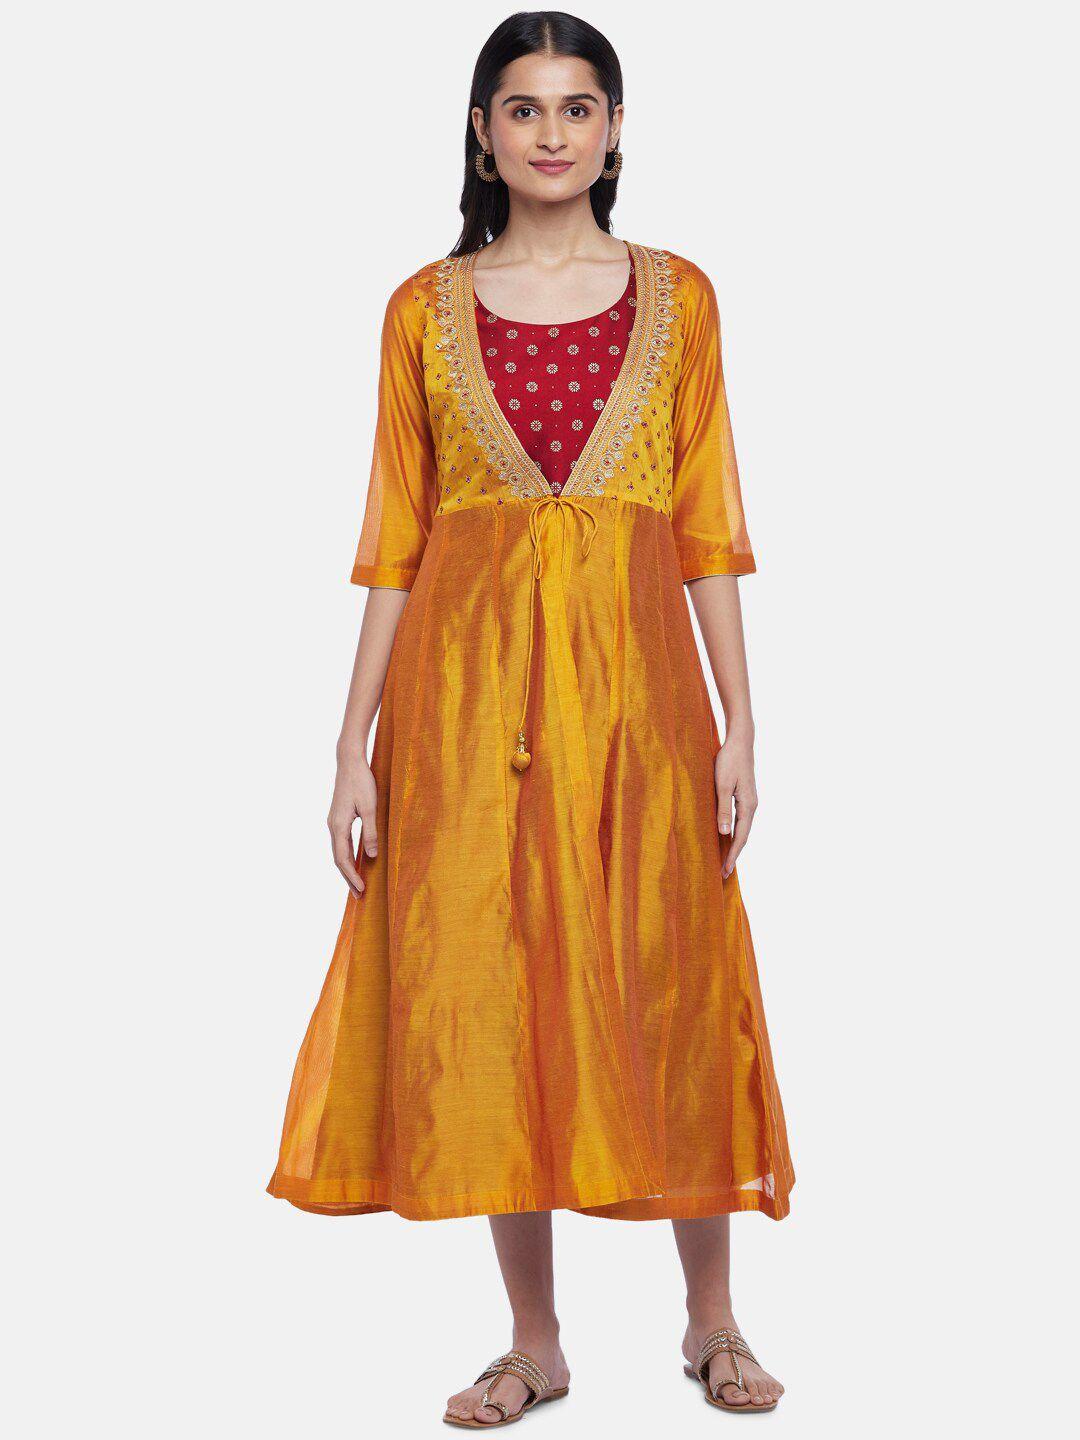 rangmanch-by-pantaloons-women-mustard-yellow-and-maroon-ethnic-print-layered-midi-dress